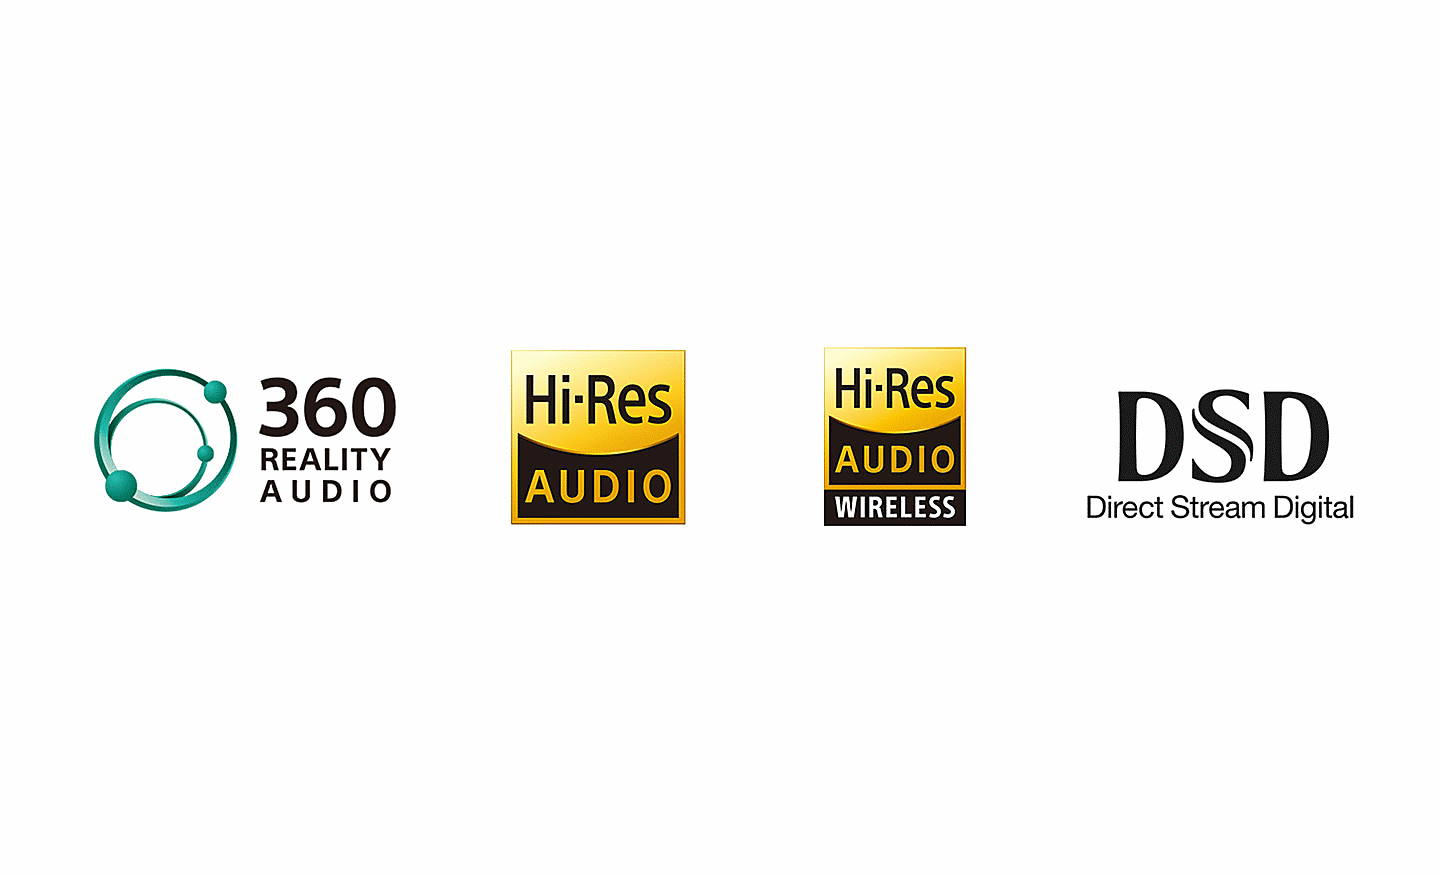 Logo van 360 Reality Audio, logo van Hi-Res Audio, logo van Hi-Res Audio Wireless, logo van DSD (Direct Stream Digital)